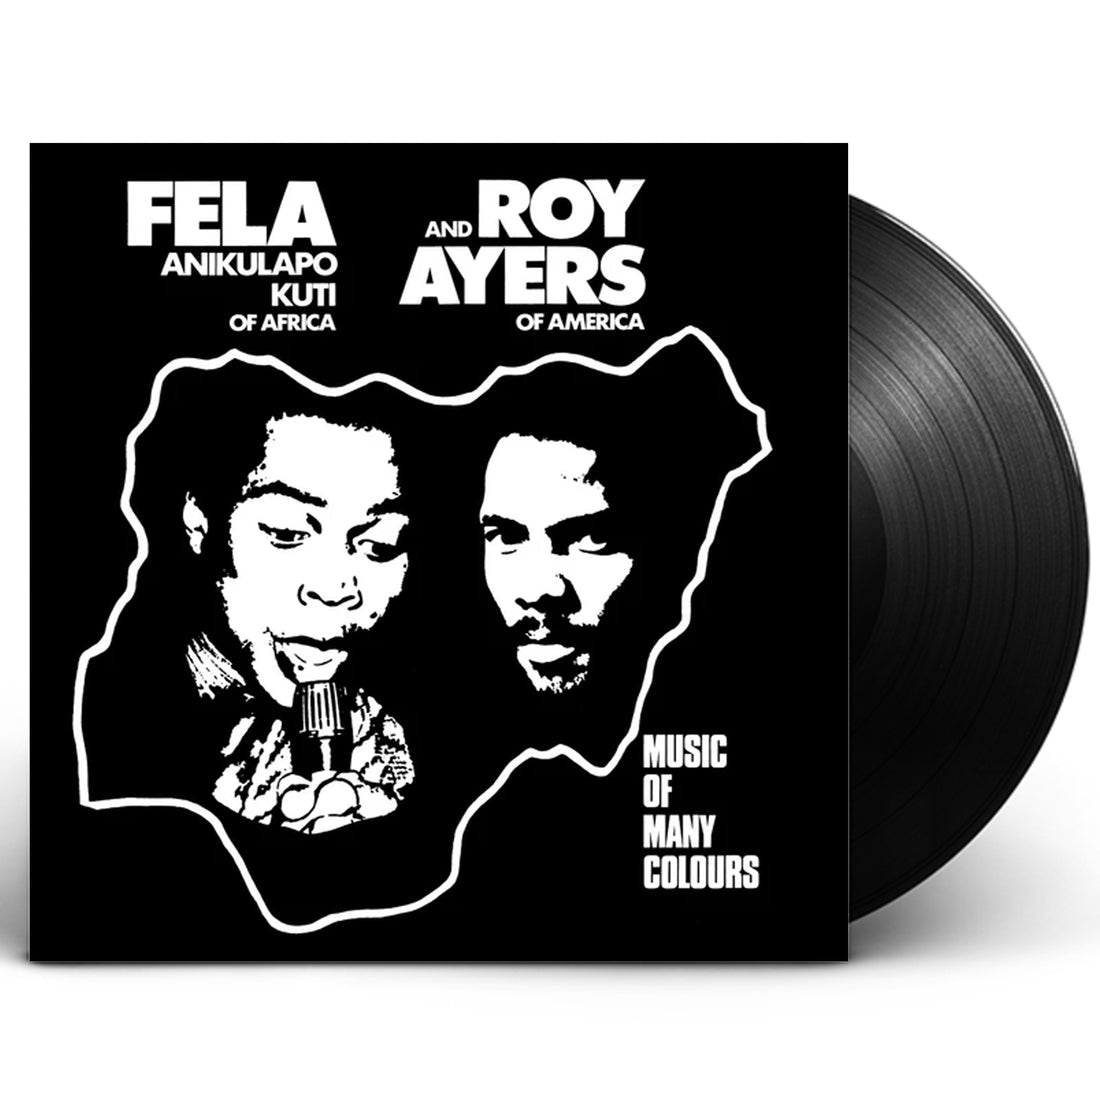 Fela Kuti & Roy Ayers "Music of Many Colors" (1980) LP Vinyl